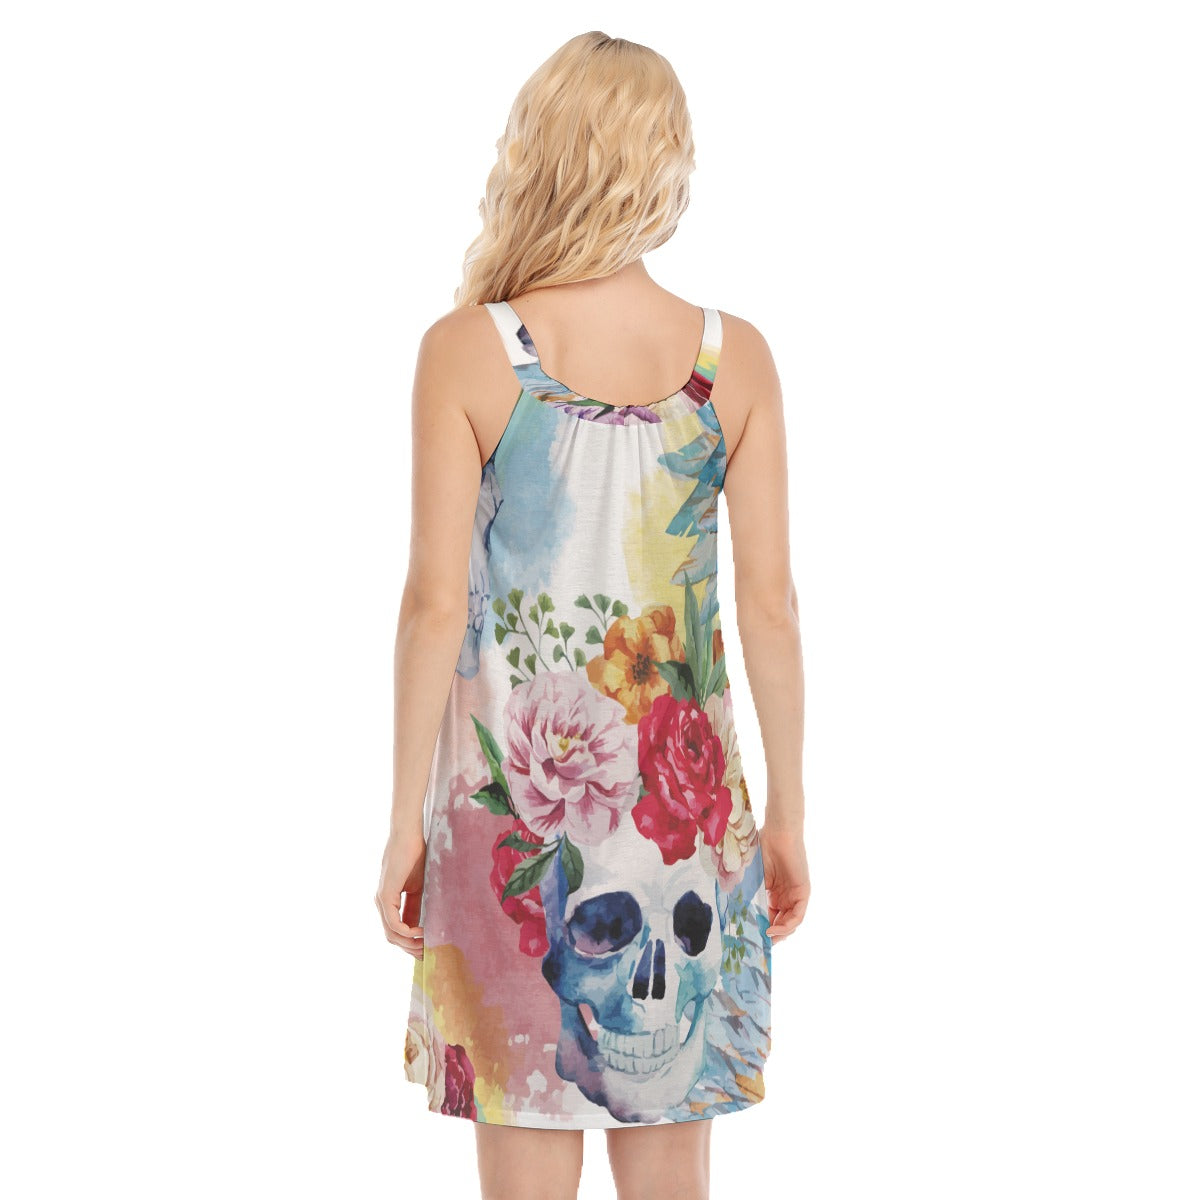 Floral skull Women's Sleeveless Cami Dress, rose skull women dress, chrismas dress, halloween dress